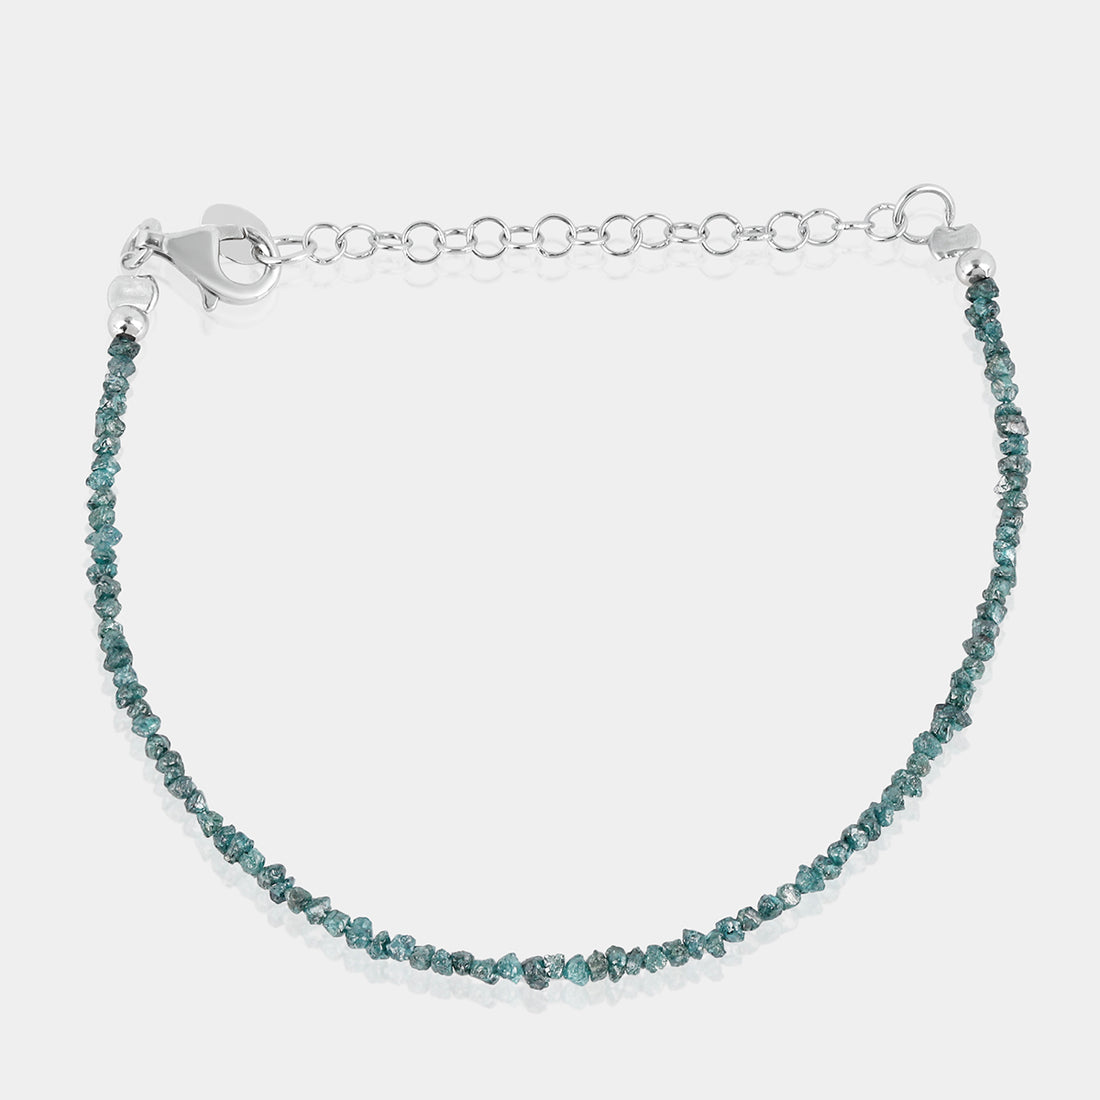 Blue Diamond Silver Bracelet